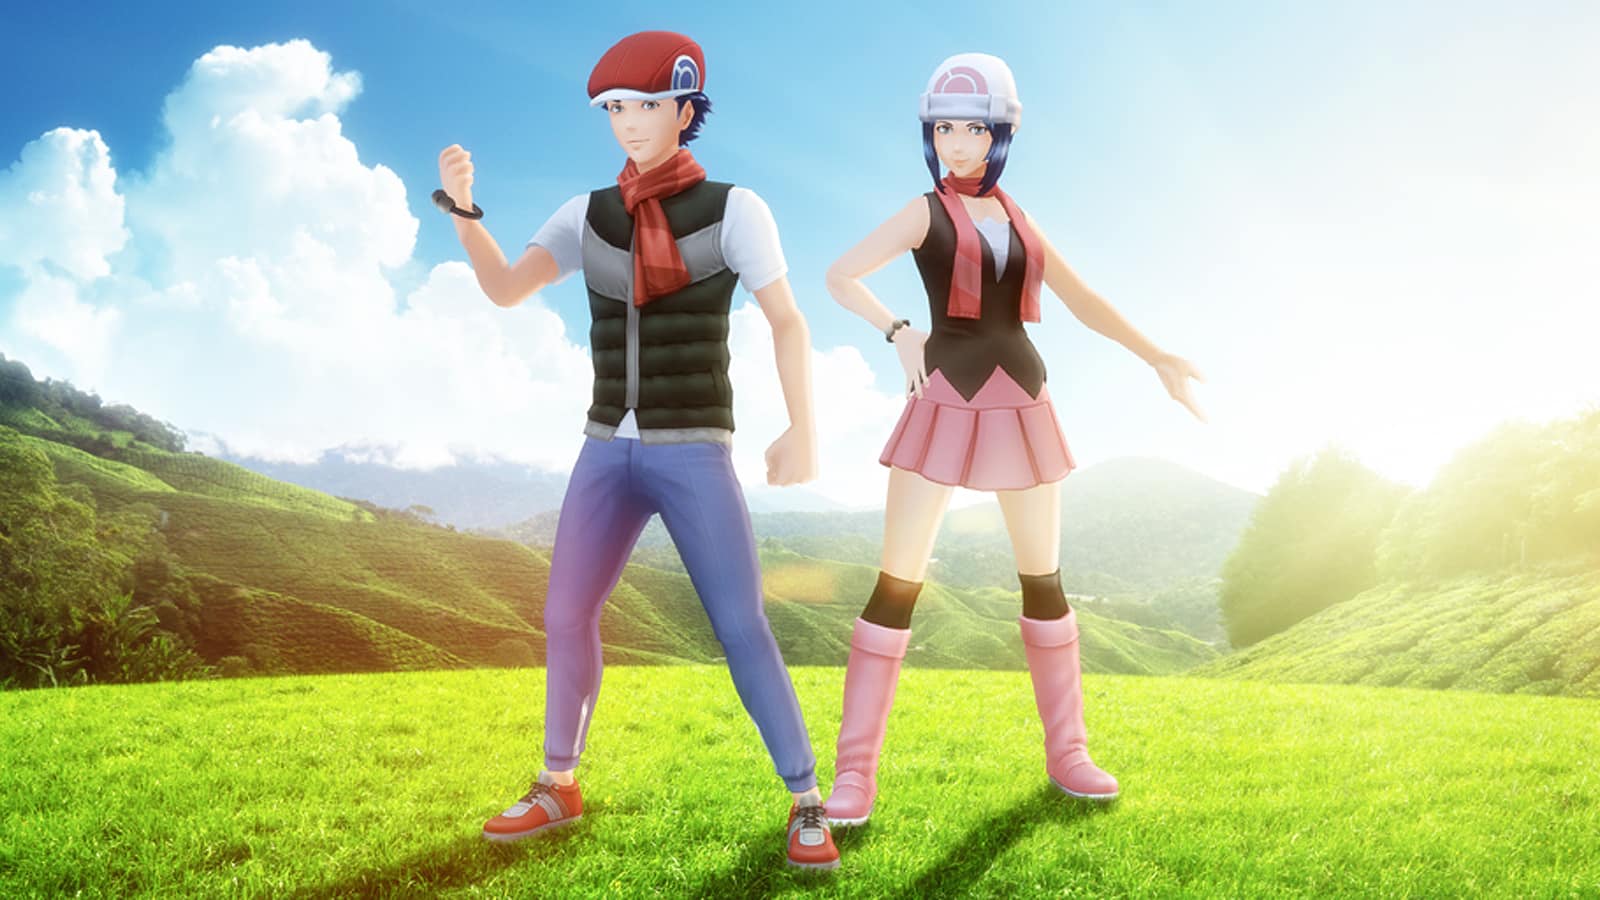 avatars wearing sinnoh costumes in pokemon go